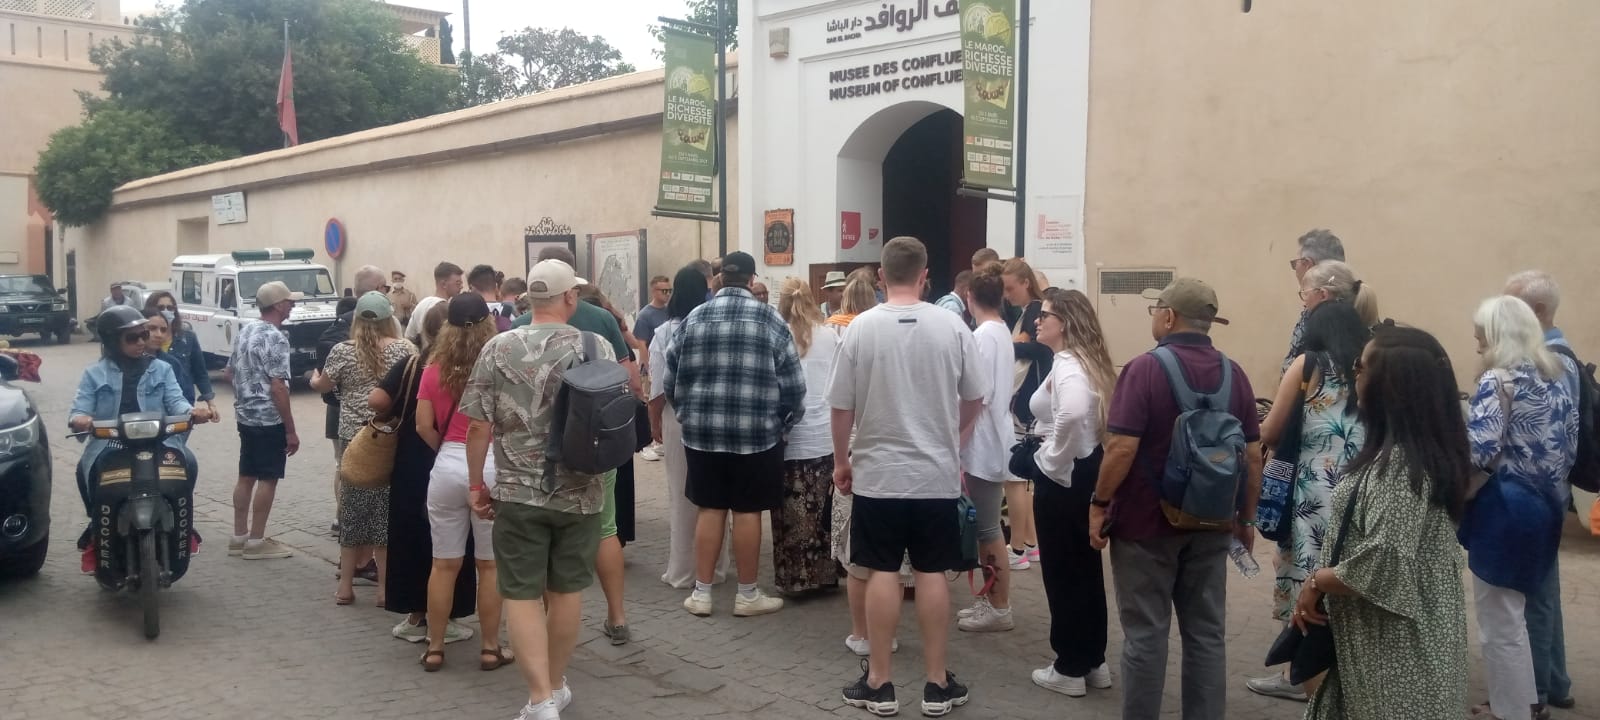 متاحف ومعارض مراكش تفتح أبوابها بالمجان يوم 22 يونيو